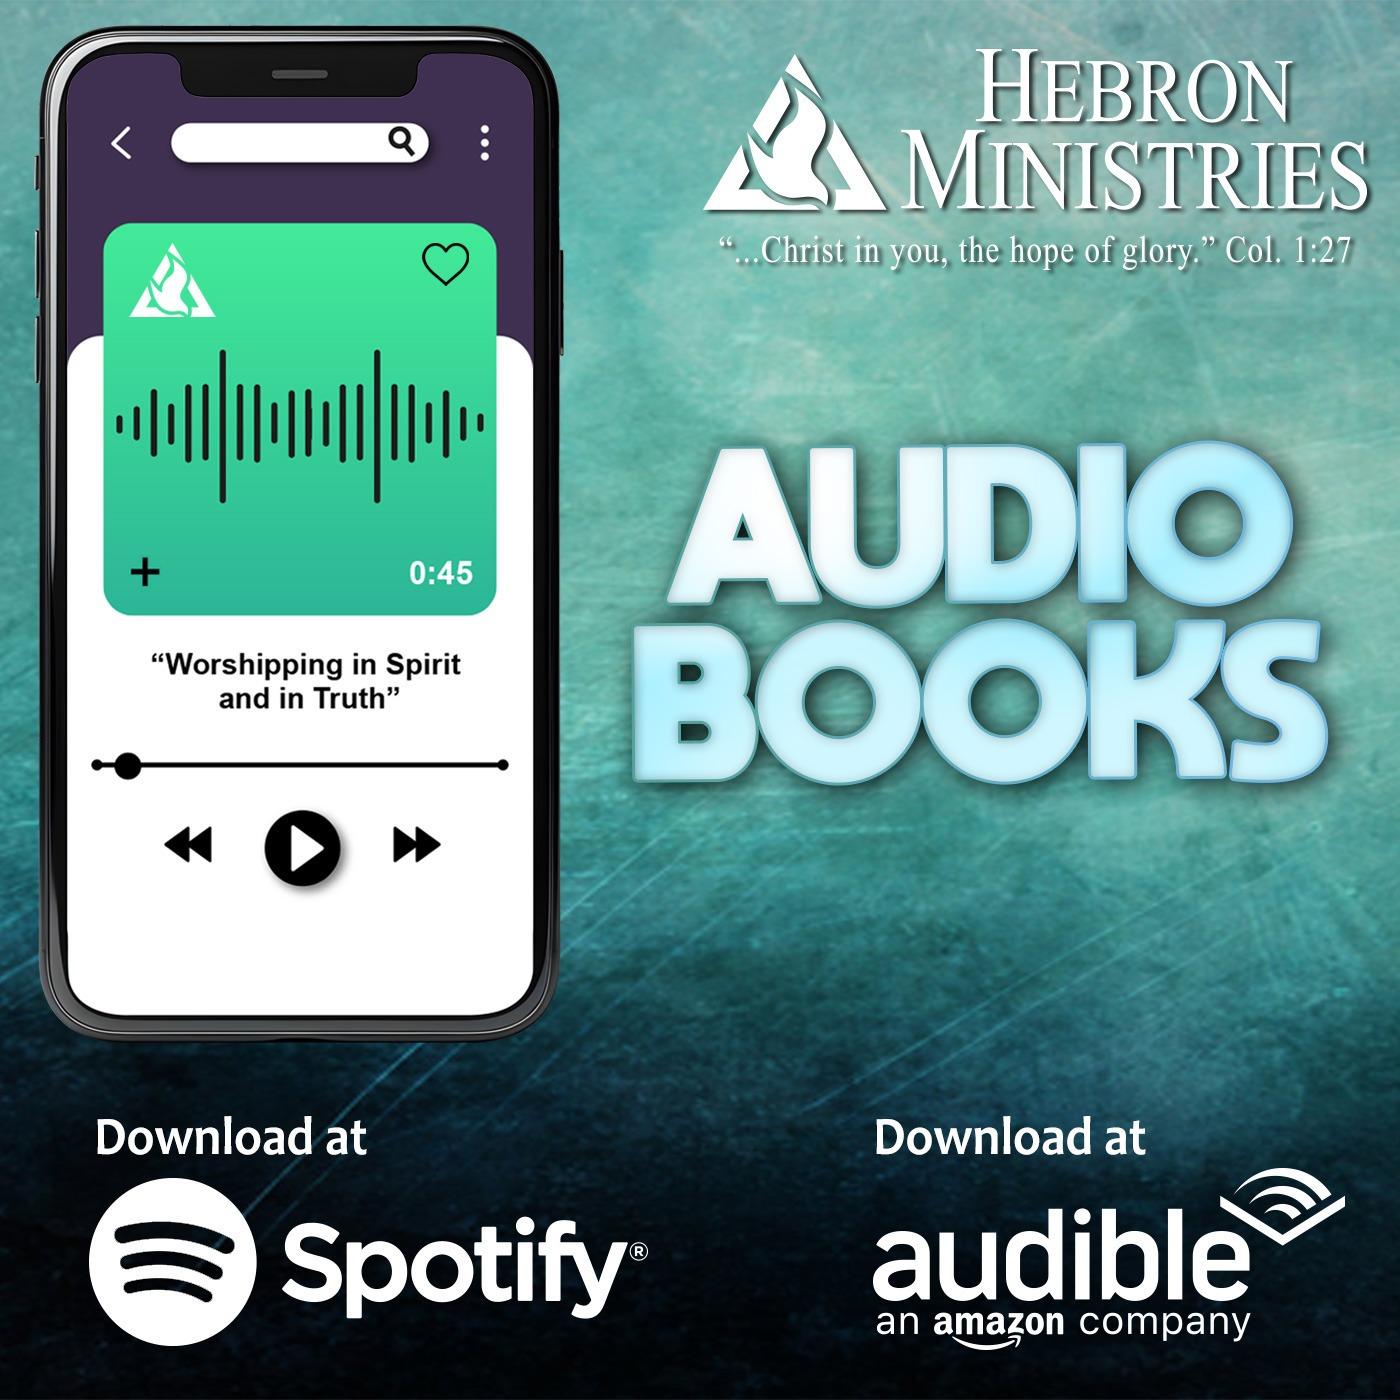 Hebron Ministries' Audio Books